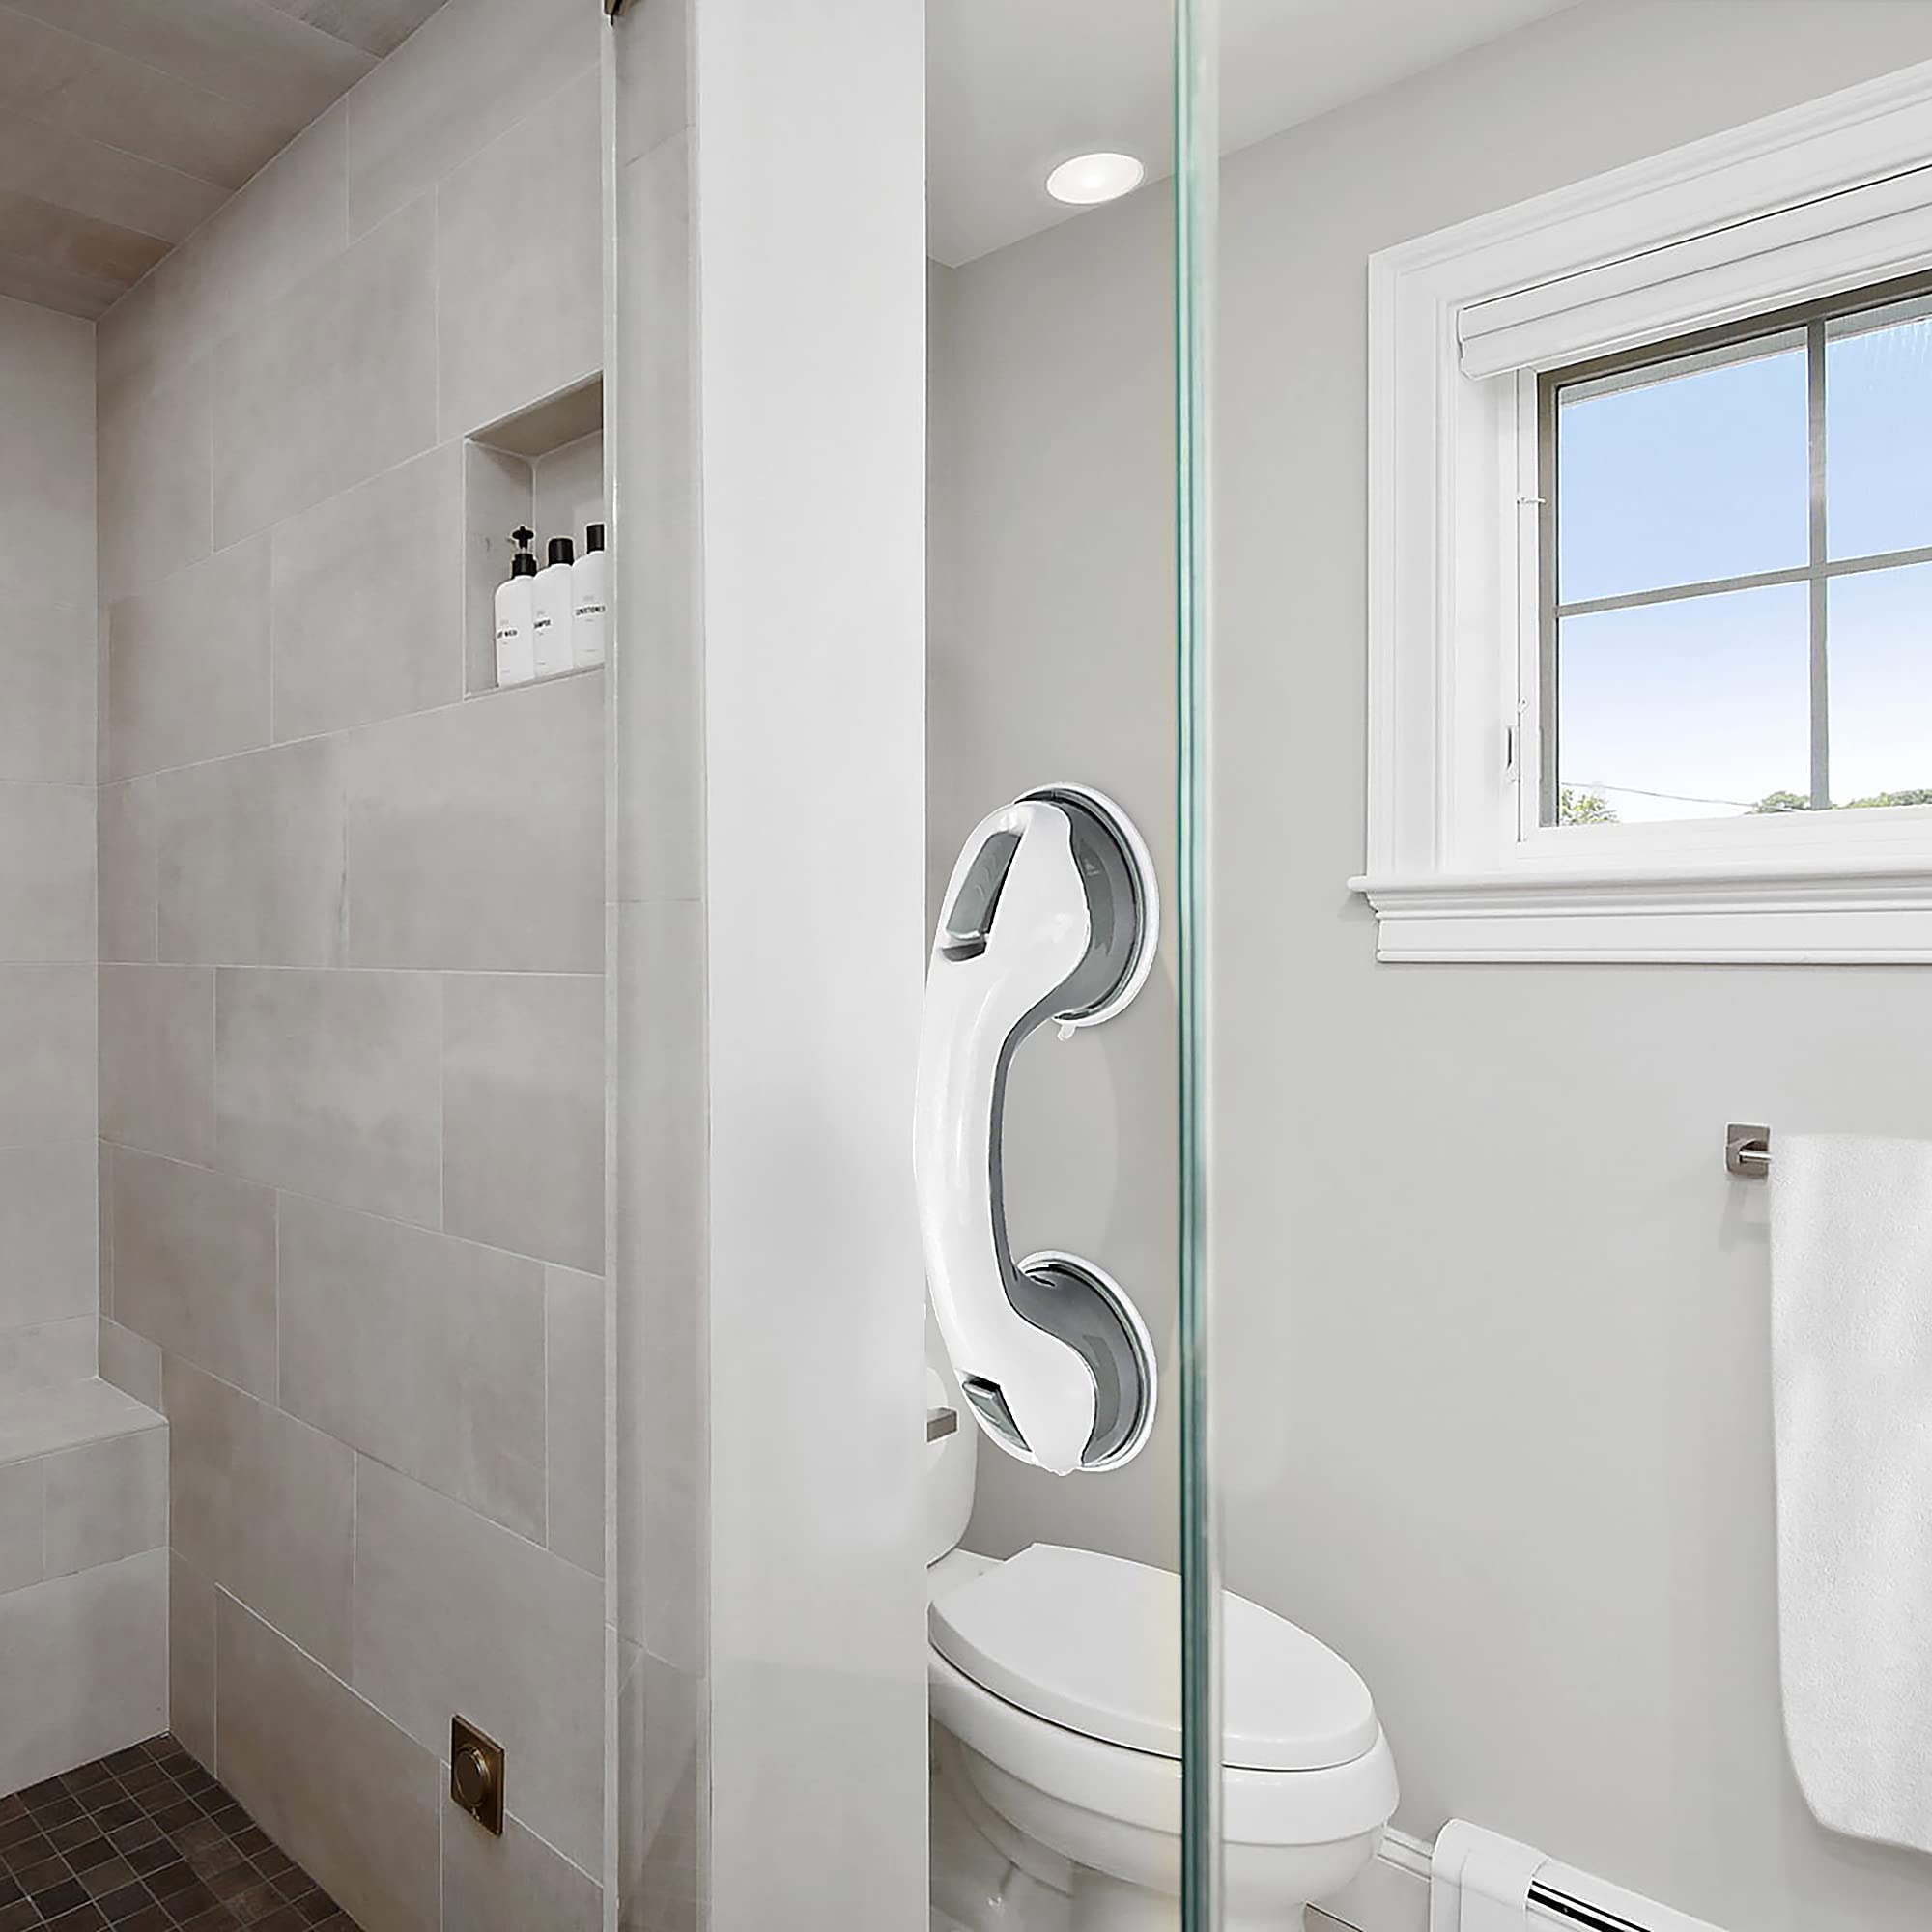 Shower Handle(2Pack)12-inch Grab Bars for Bathtubs and Showers, Shower Handles for Elderly Suction Grab Bars Bathroom Non-Slip Handrail Safety Grip for Seniors Handicap Elderly Assistance Product